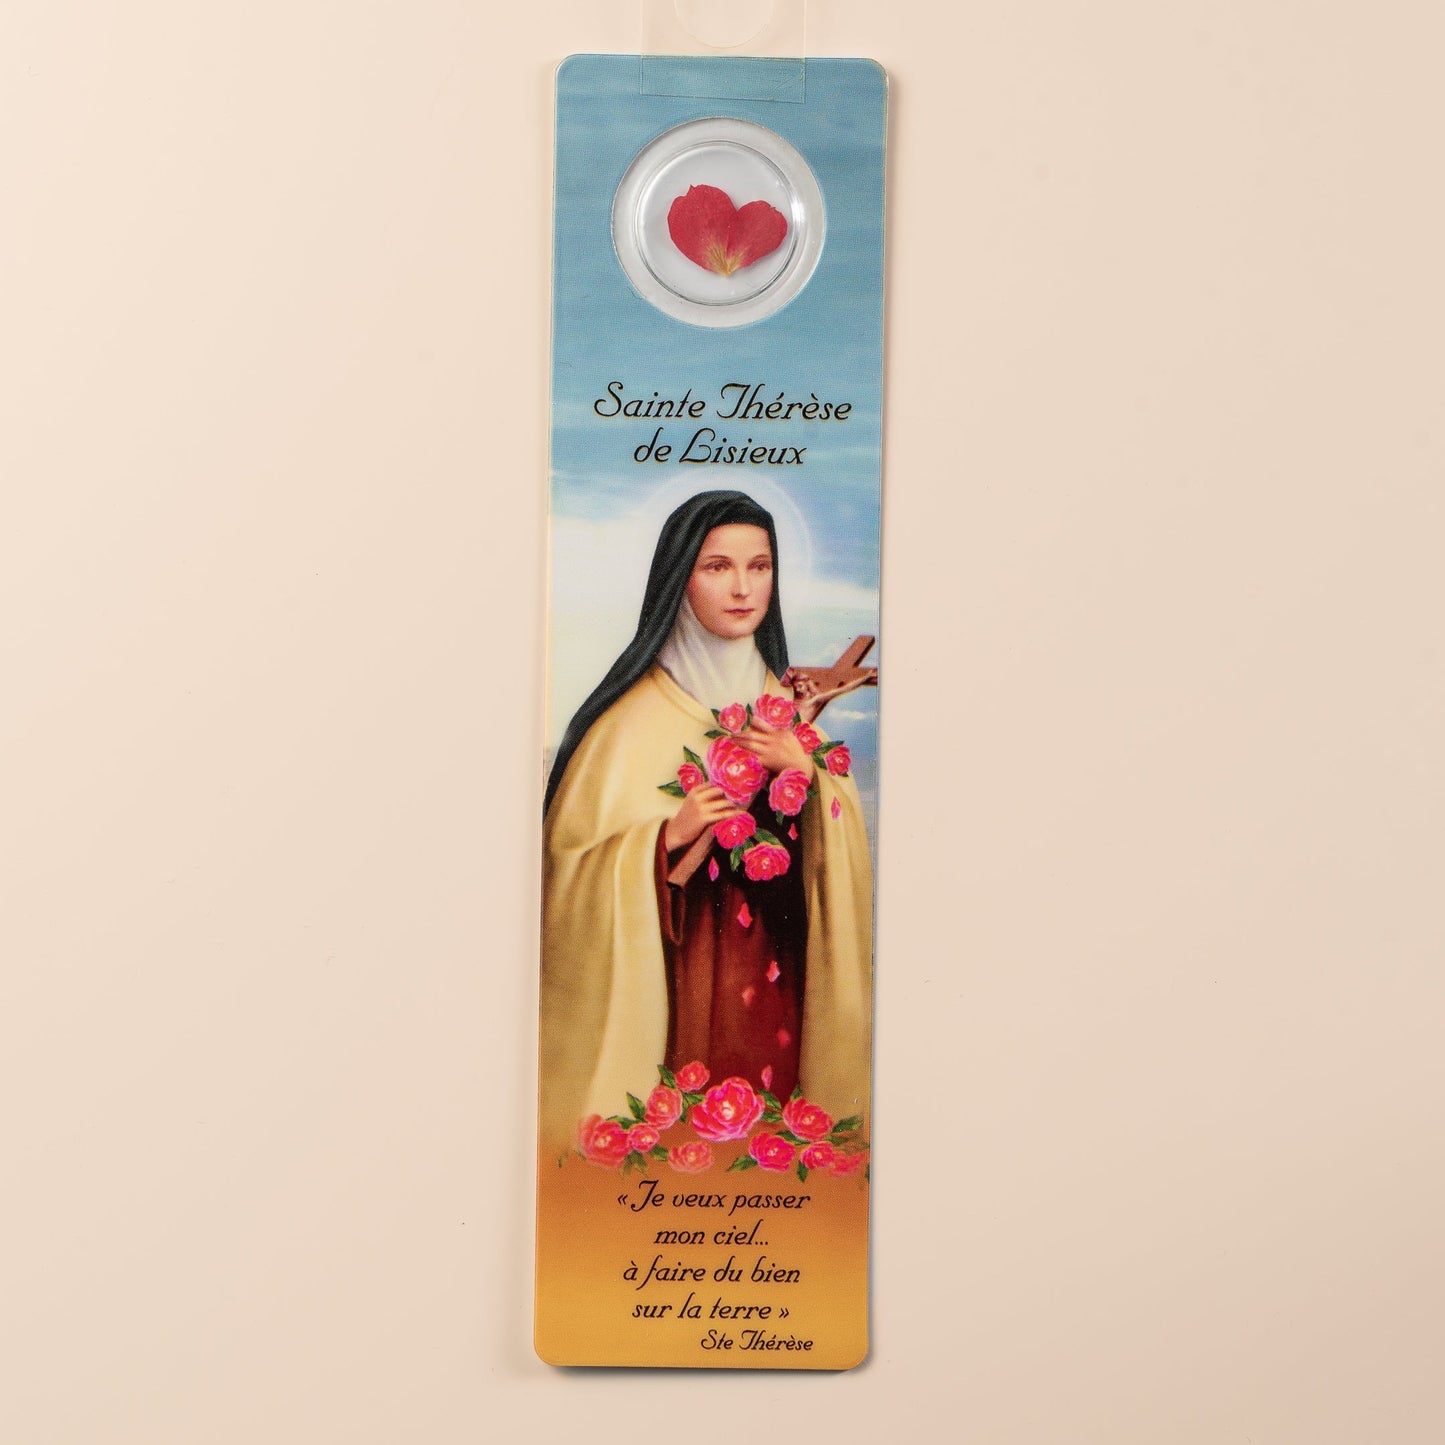 Sainte-Therese bookmark